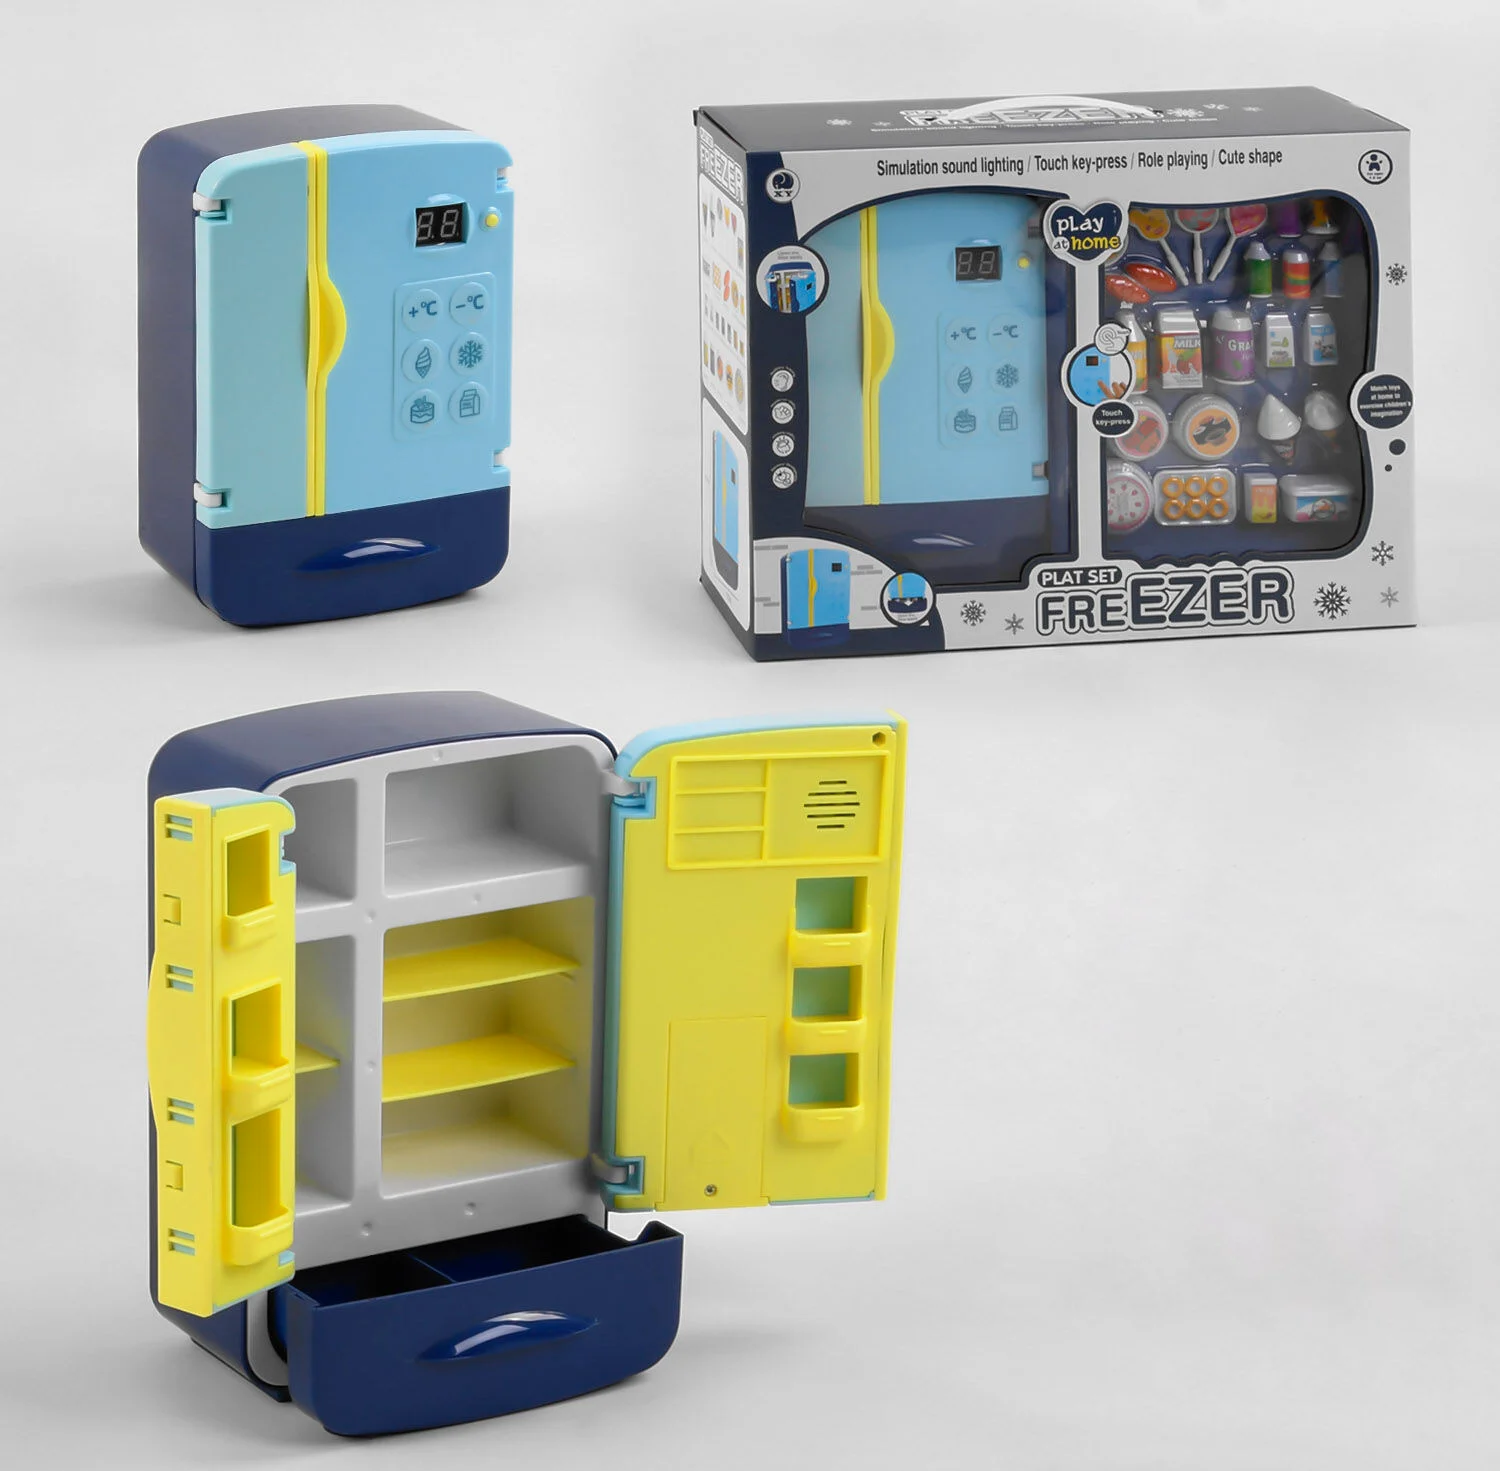 Фотография 1 товарной позиции интернет-магазина детских игрушек www.smarttoys.com.ua Холодильник AZ 130 (18) LED підсвічування, продукти, звук, в коробці